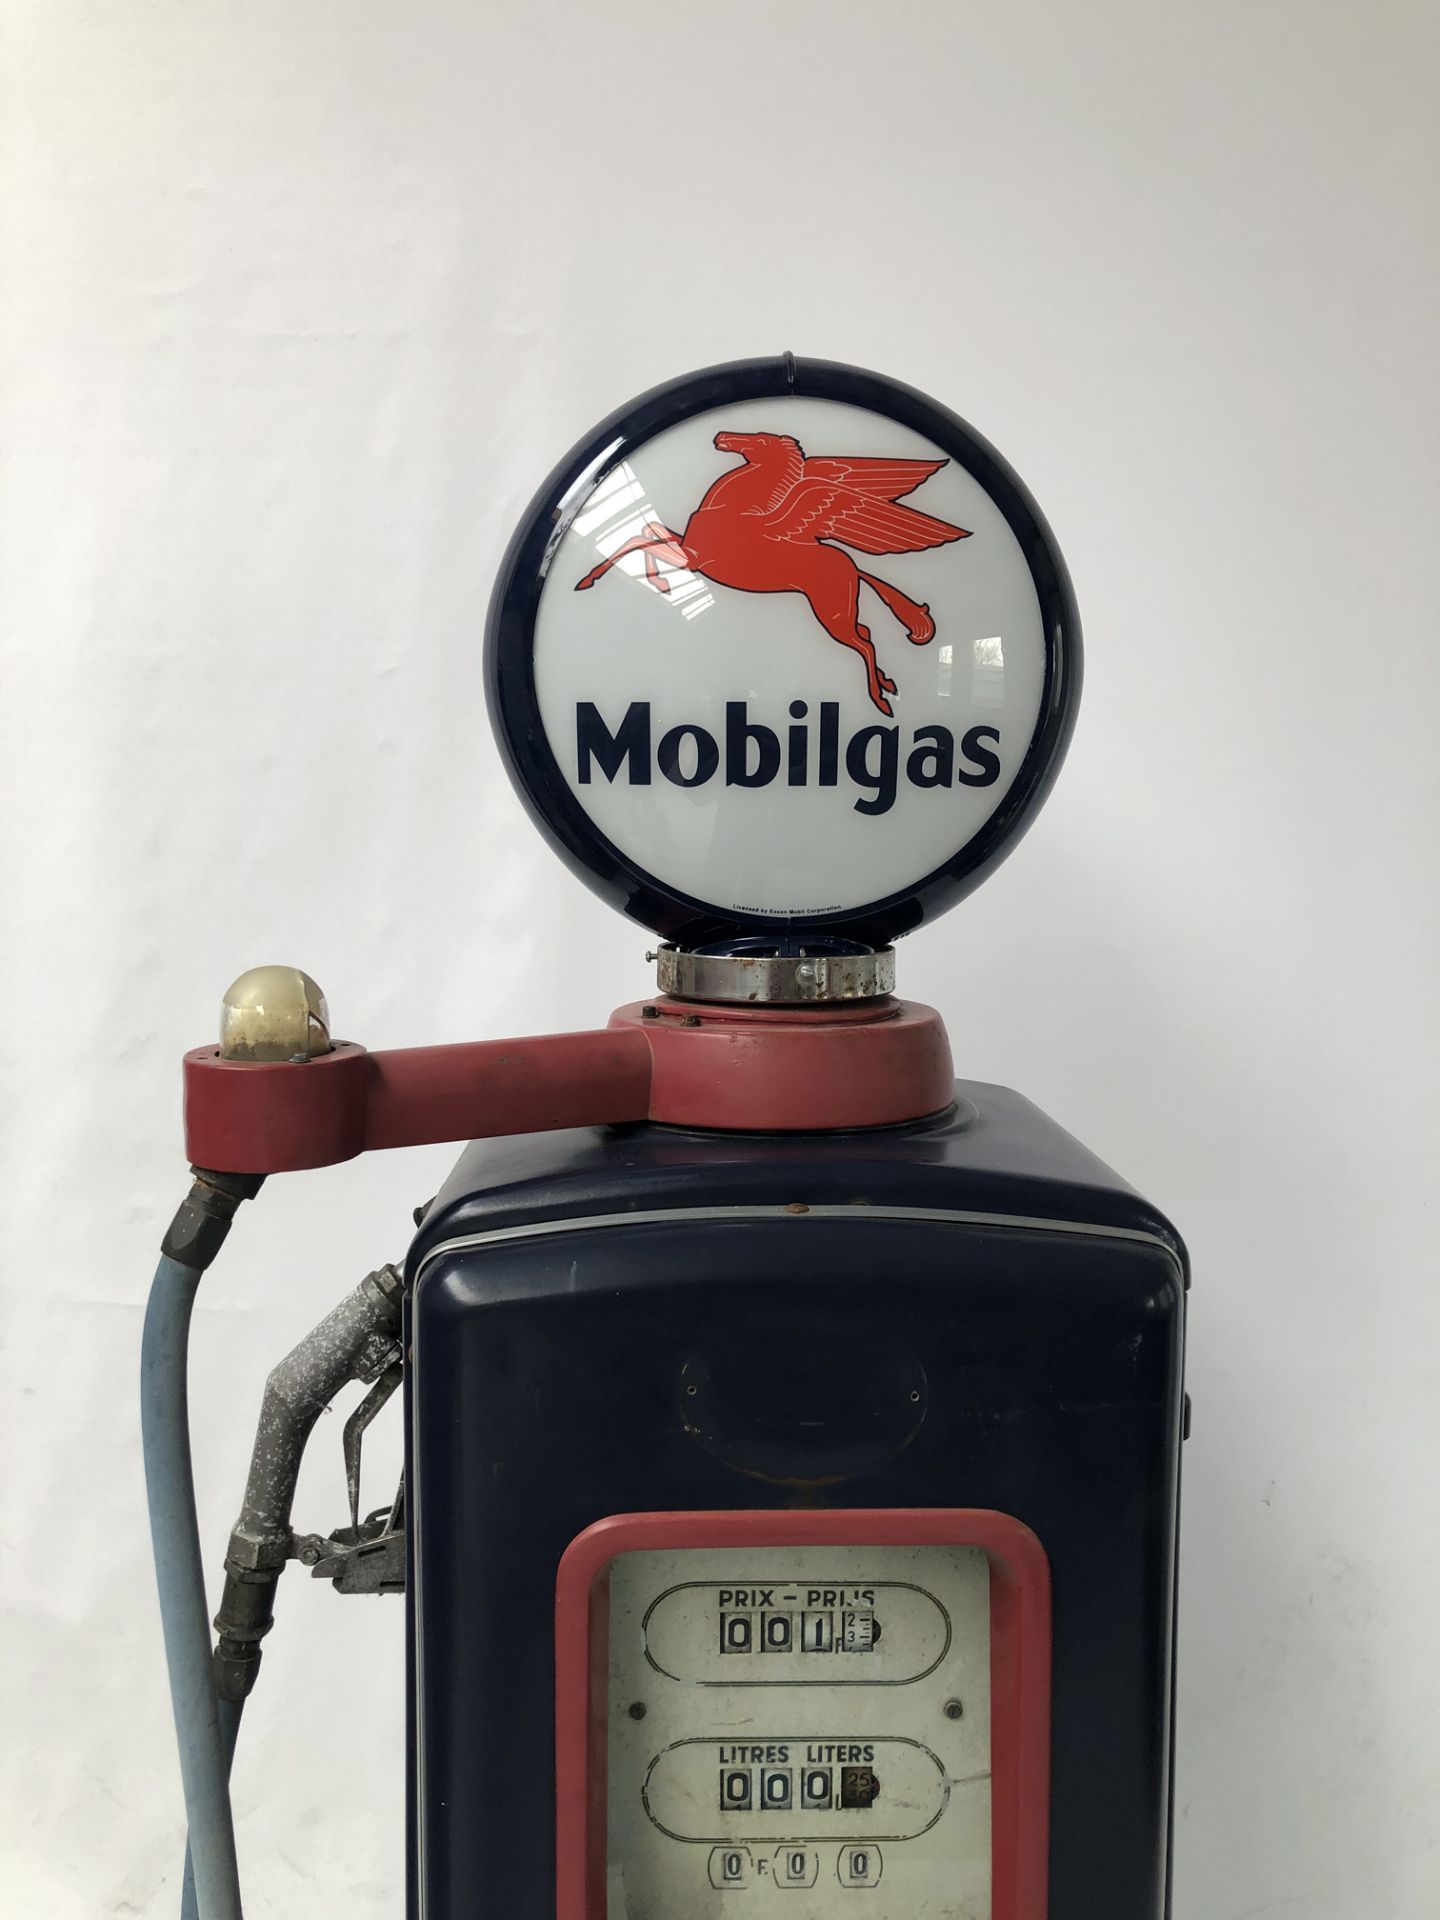 Vintage European Gas Pump with Mobilgas Theme - Image 3 of 5